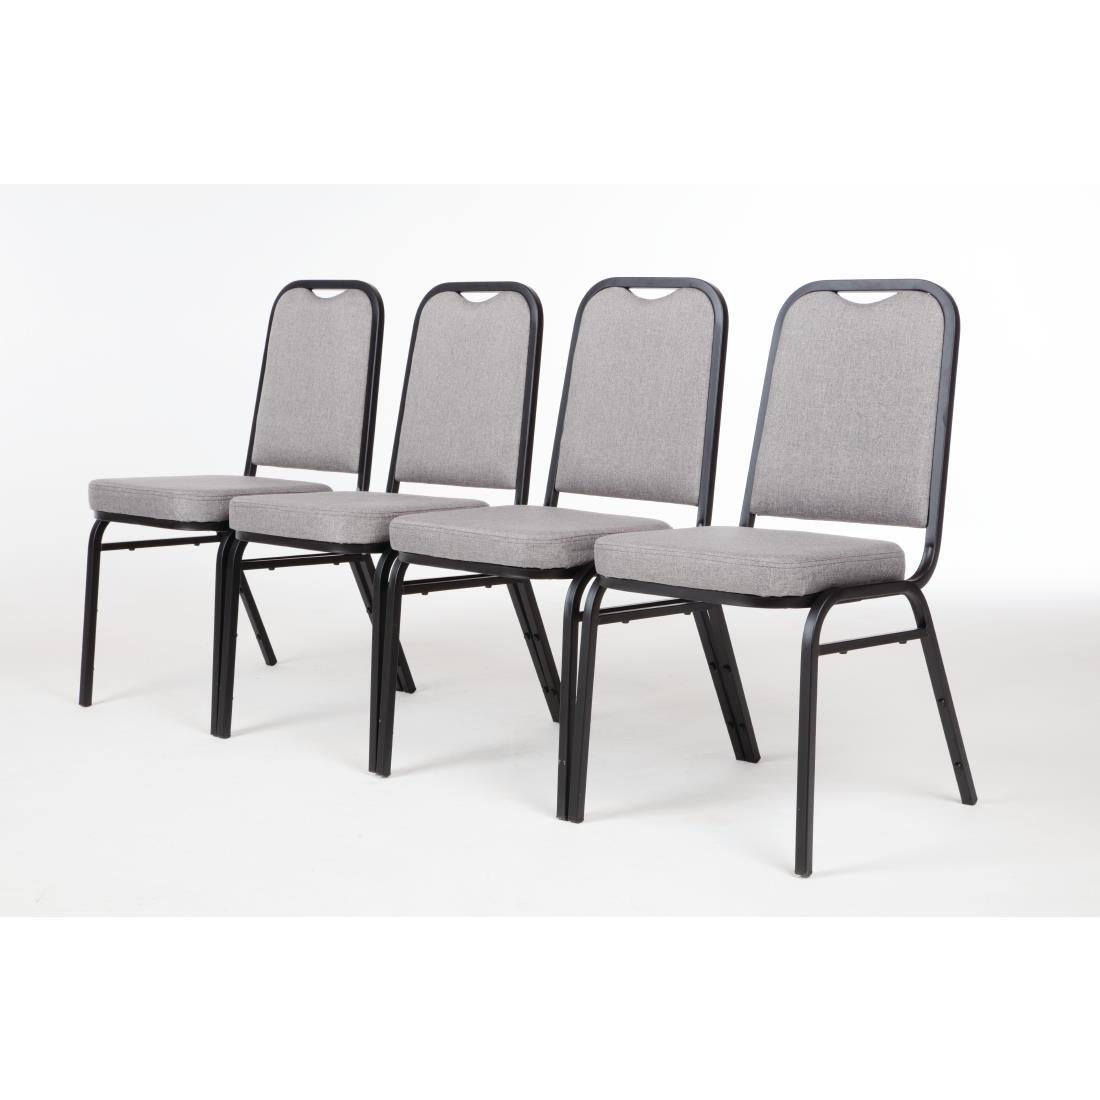 Bolero Square Back Banquet Chairs Black & Grey (Pack of 4) - DA602  - 2